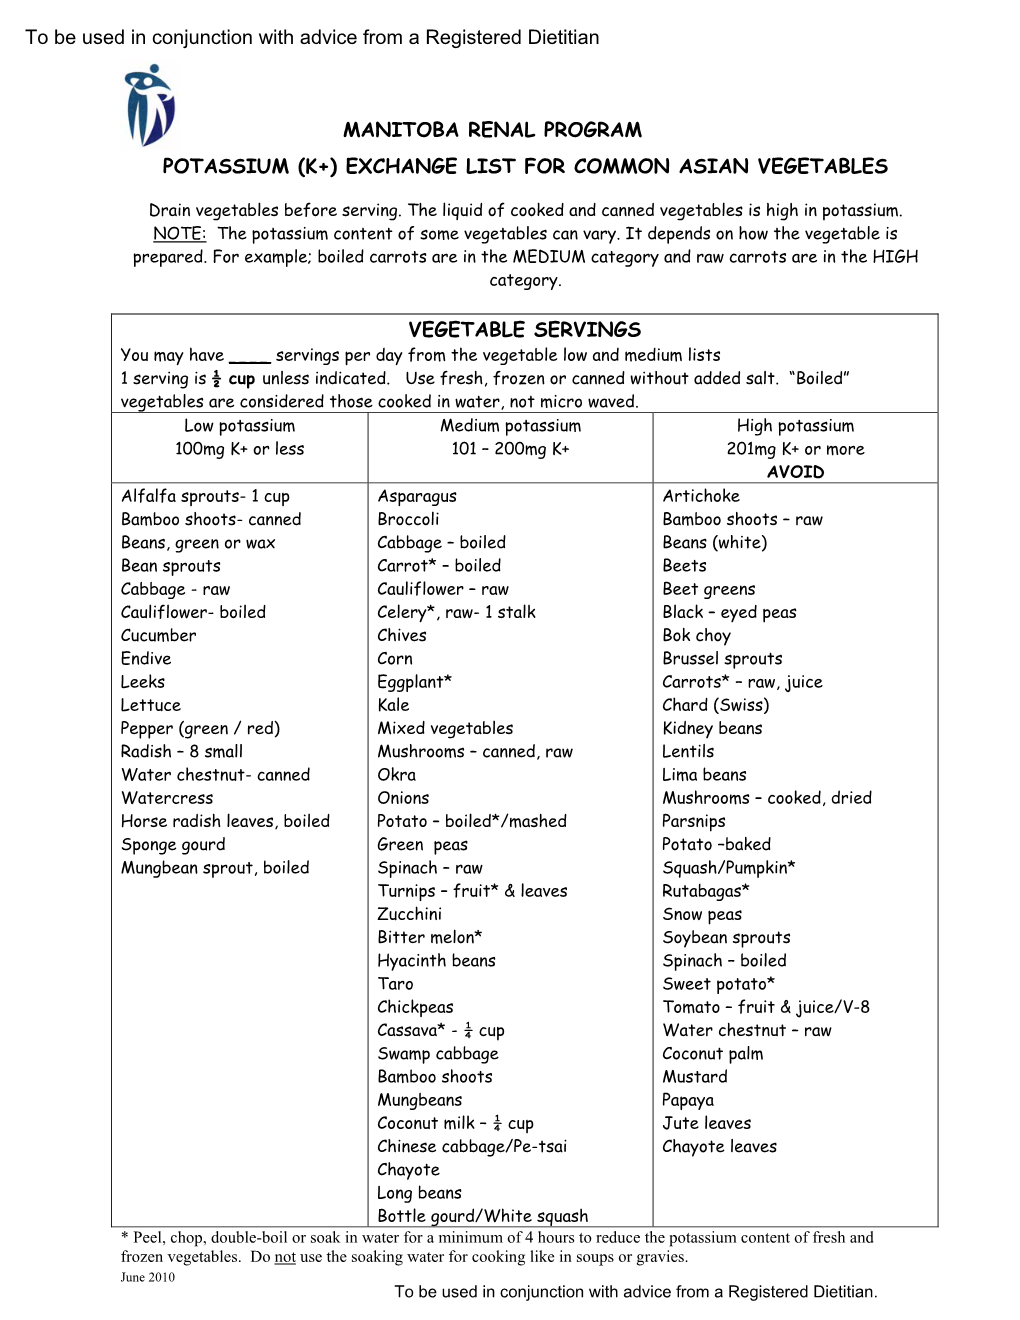 Potassium K+ Exchange List for Common Asian Vegetables